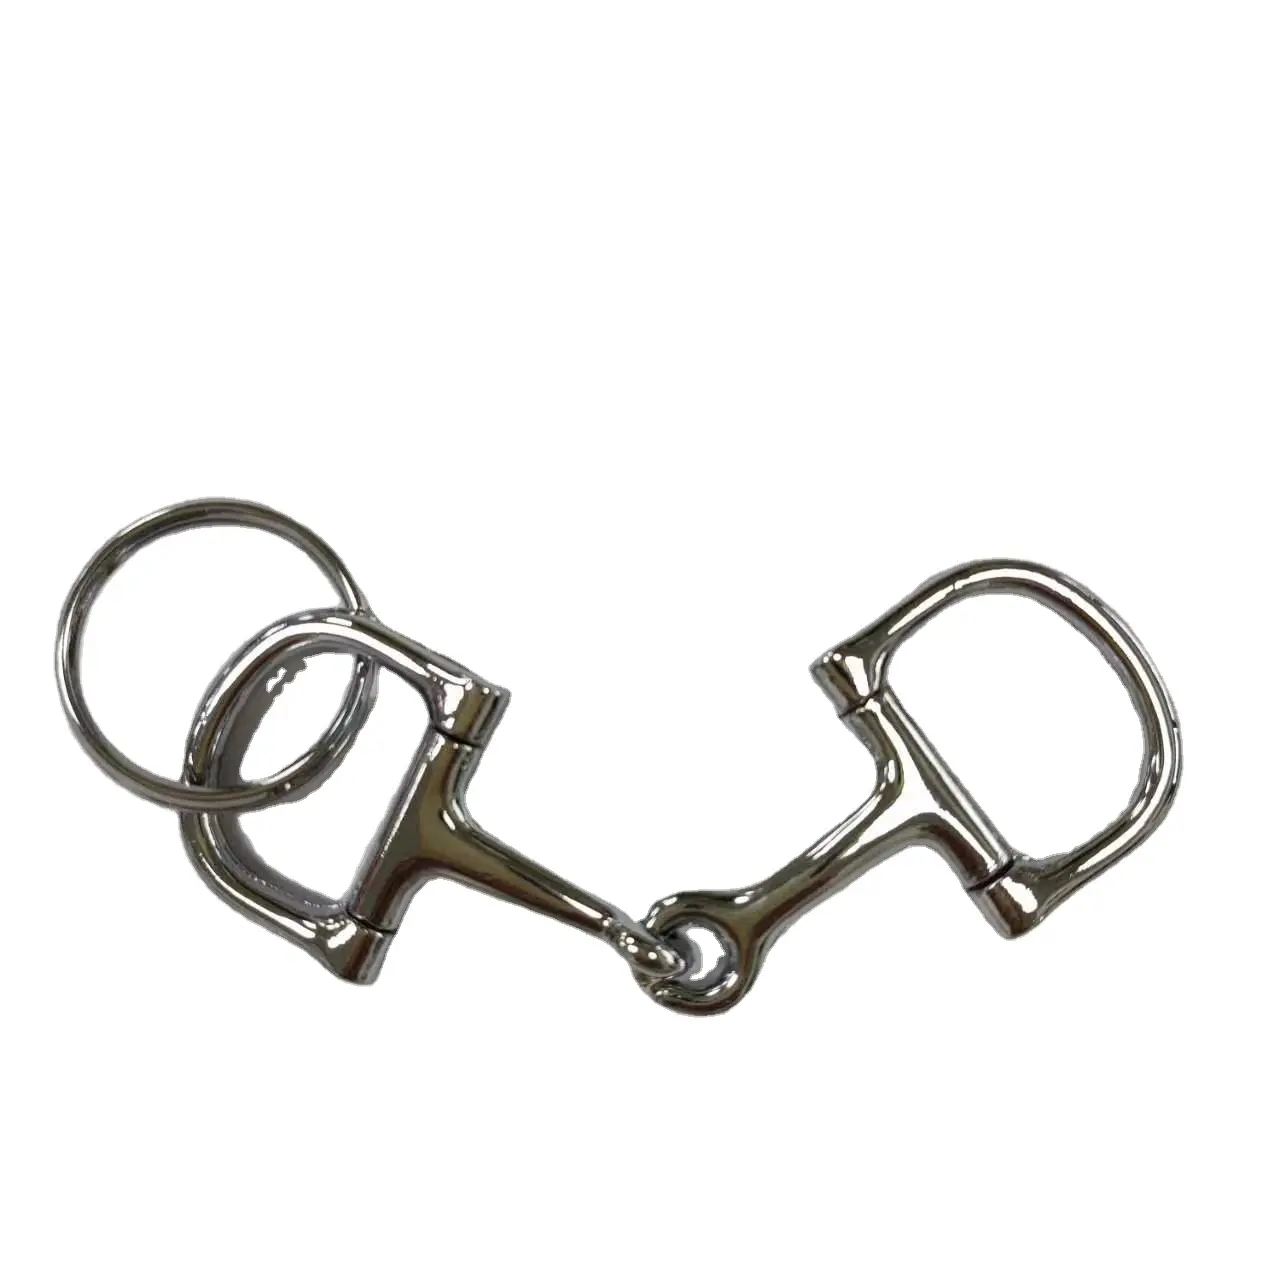 Horshi gantungan kunci mata kuda Mini, Gantungan Kunci mata kuda Mini bentuk D